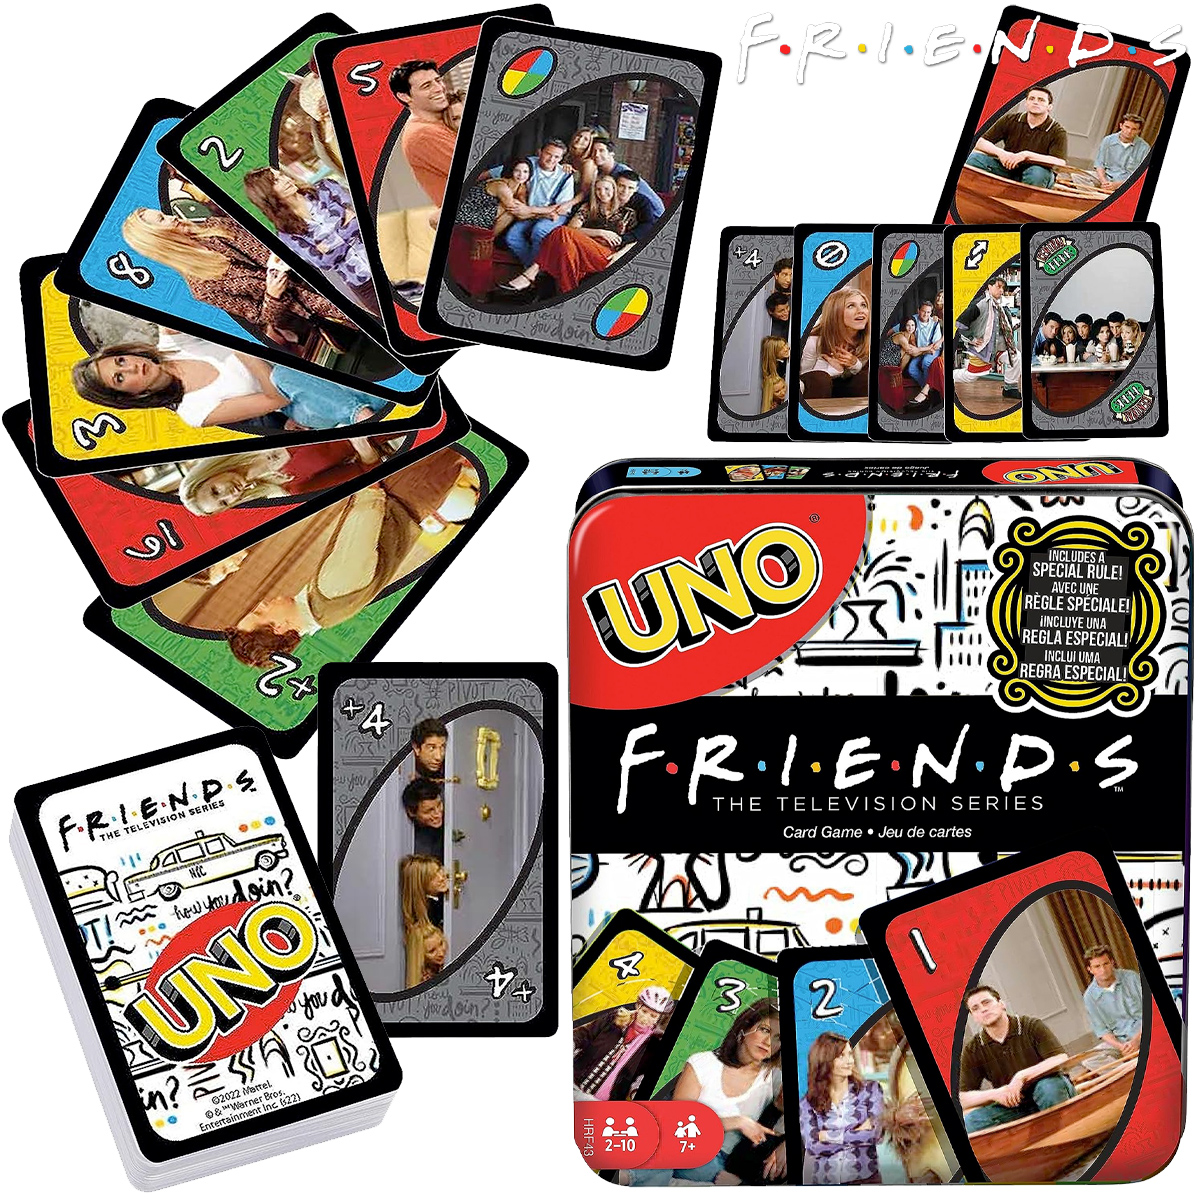 Mattel UNO Card Game - The Mandalorian All Wild Grogu